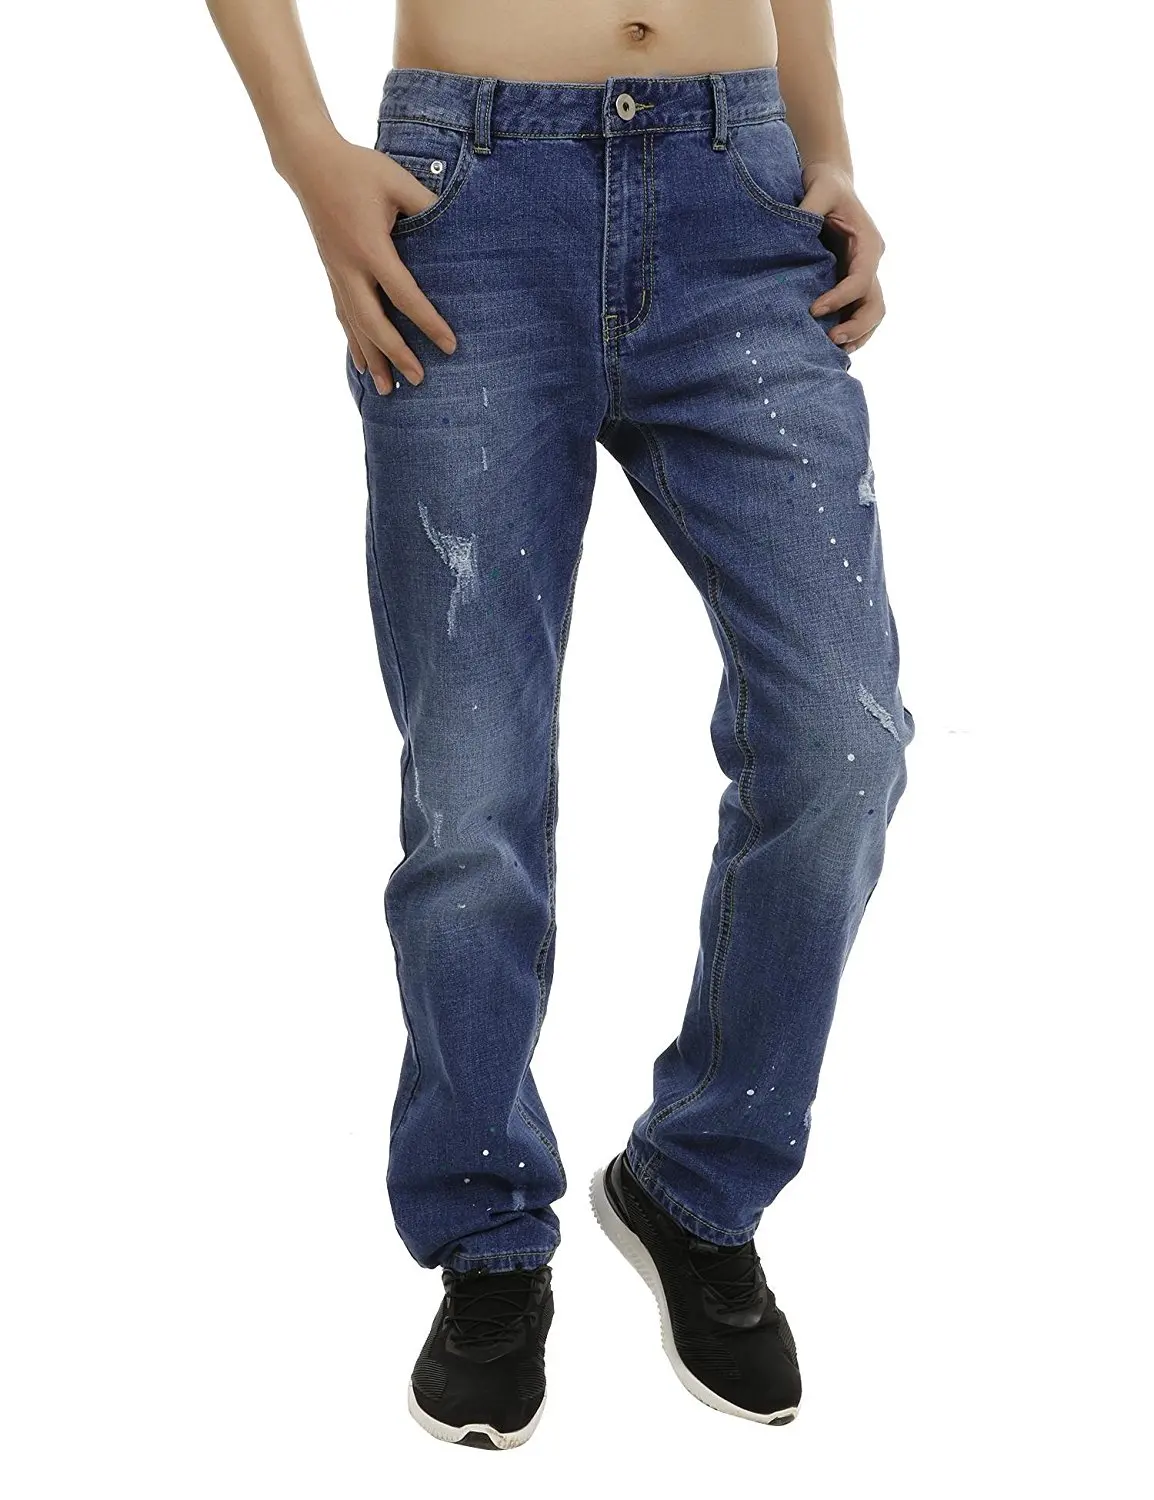 mens stretch jeans short leg